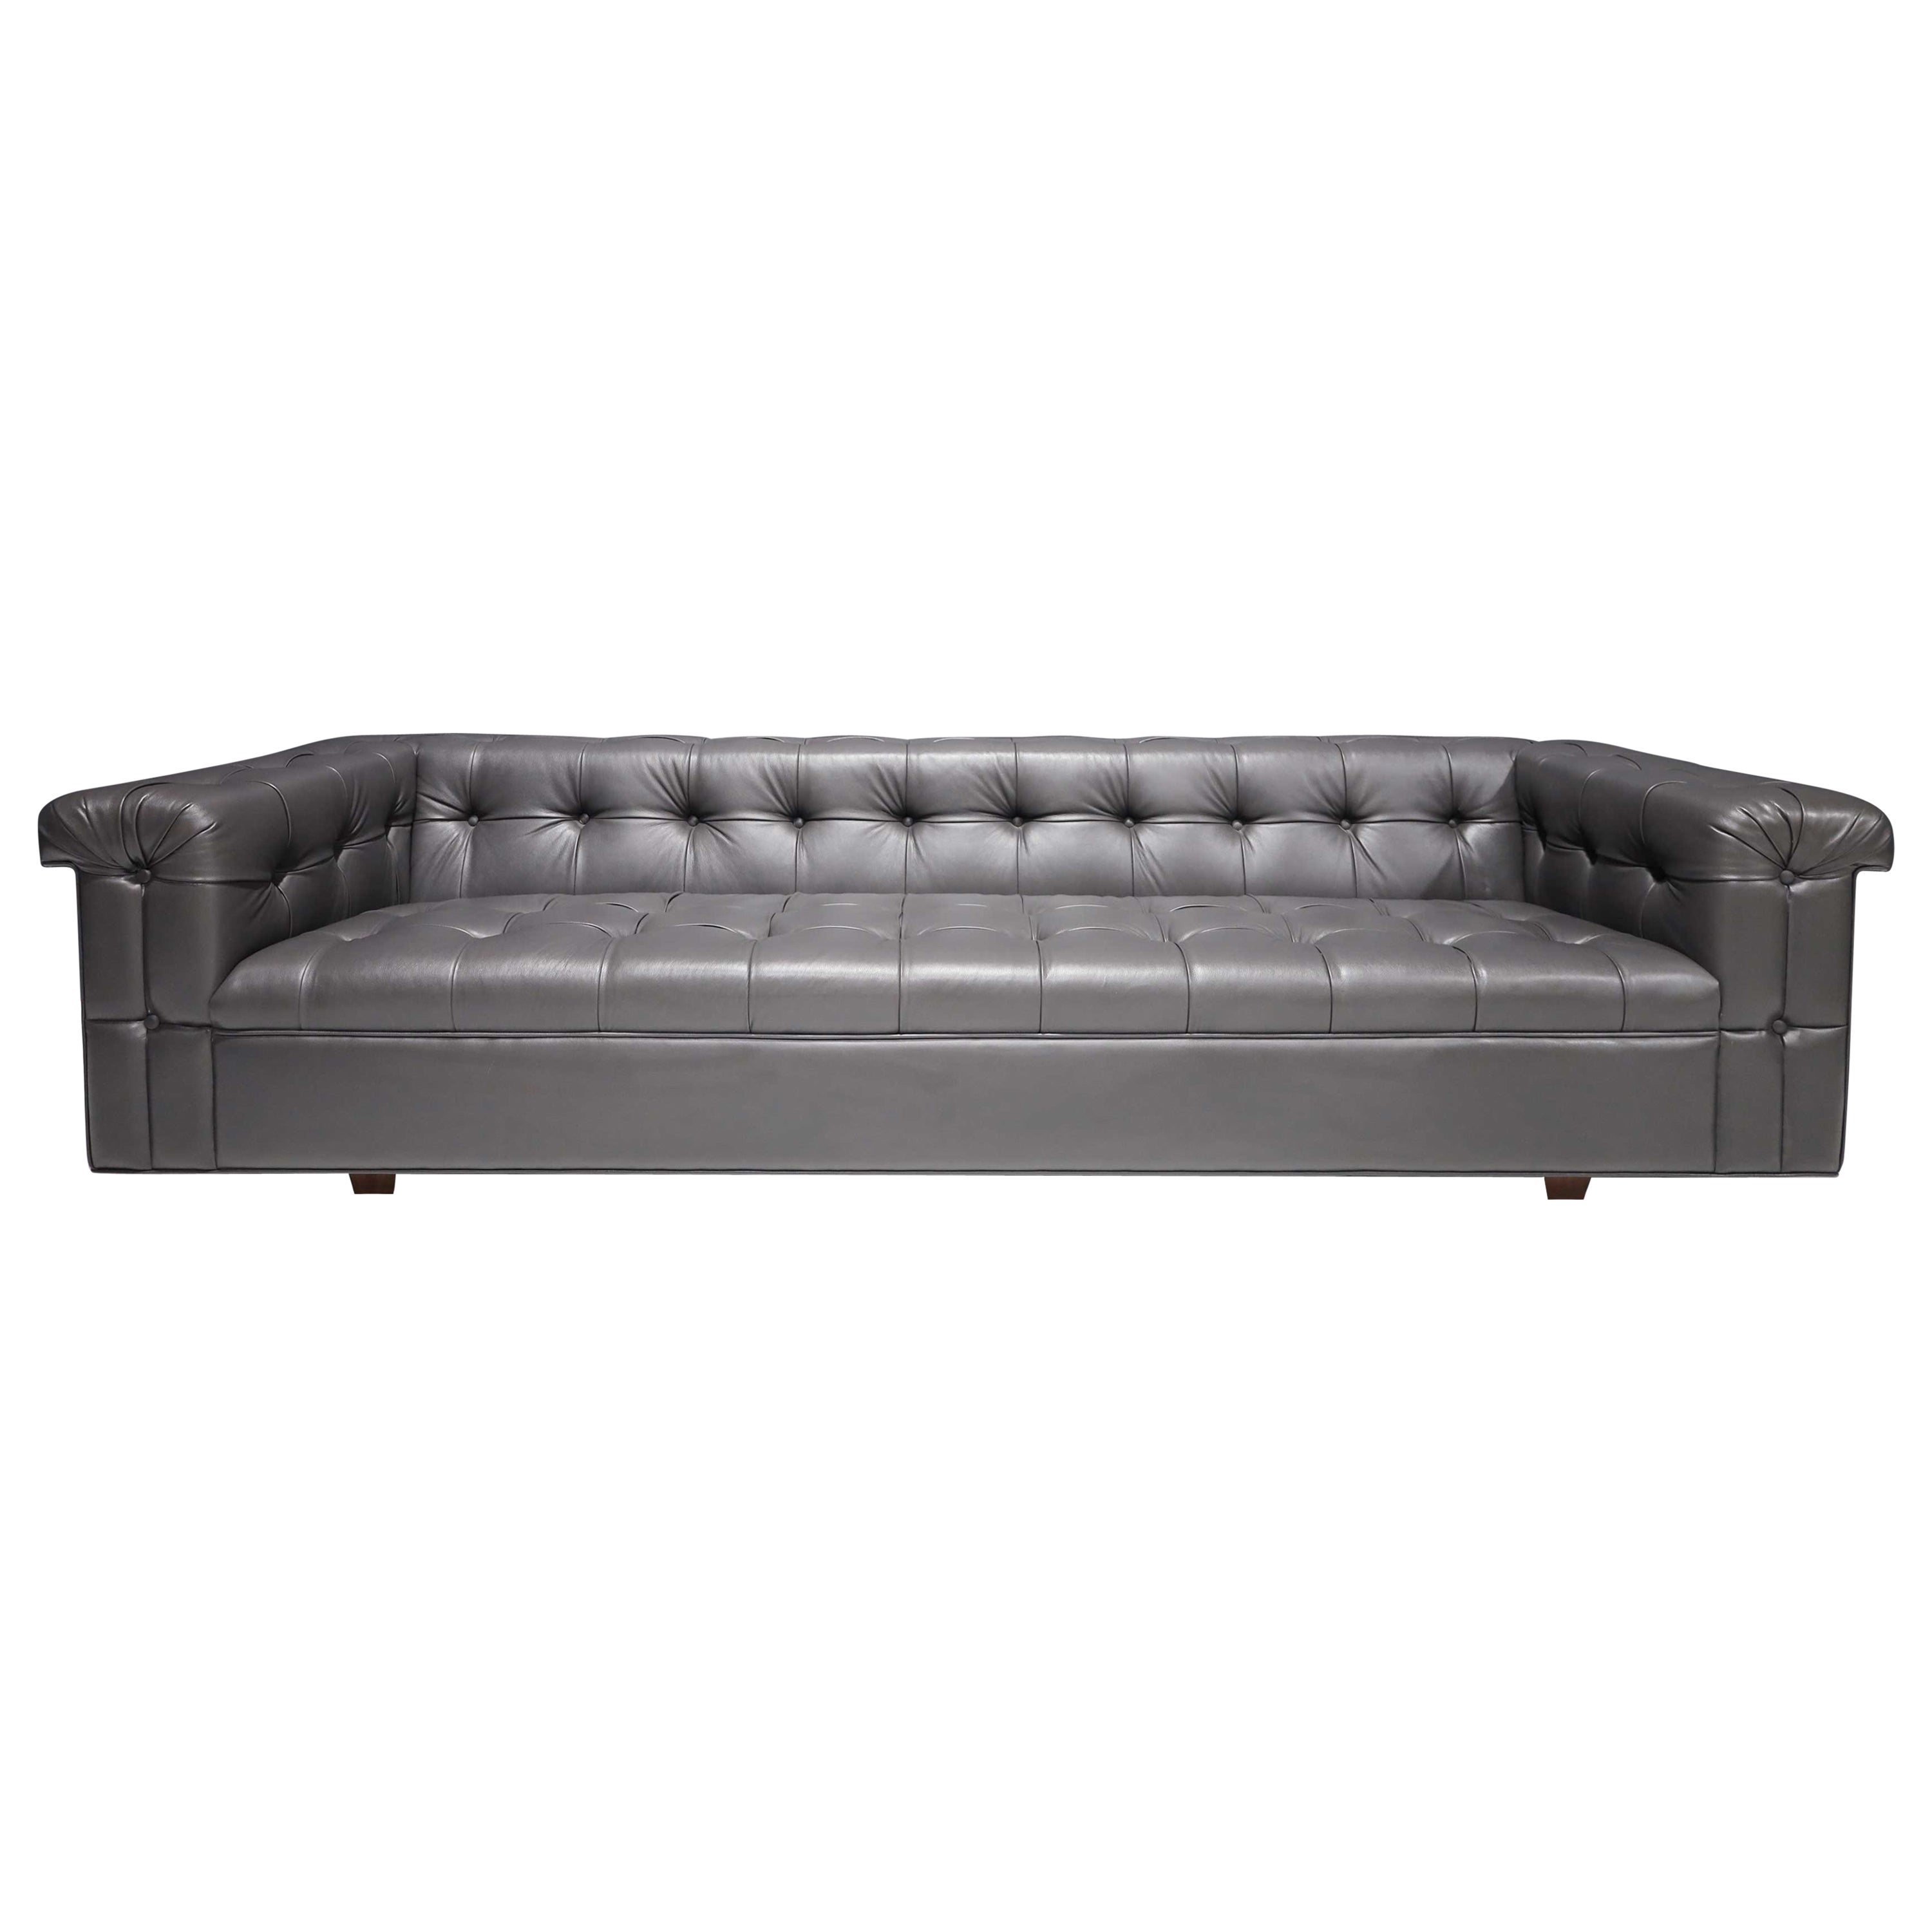 Edward Wormley for Dunbar Party Sofa Model 5407 in Dark Gray Leather